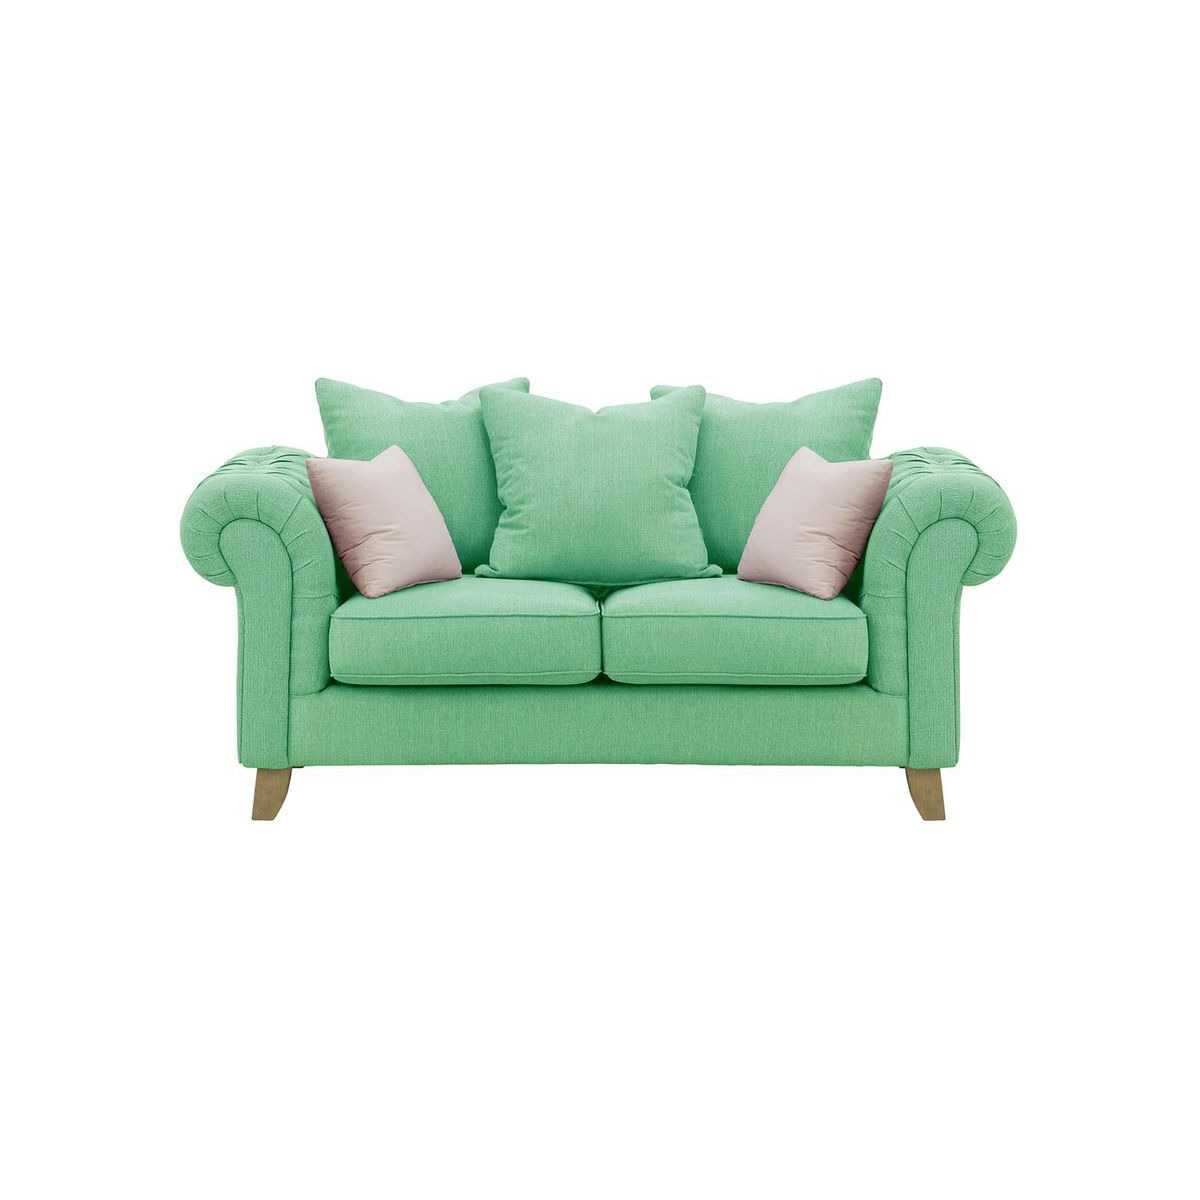 Monza 2 Seater Sofa, Turquoise/Lilac, Leg colour: wax black - image 1